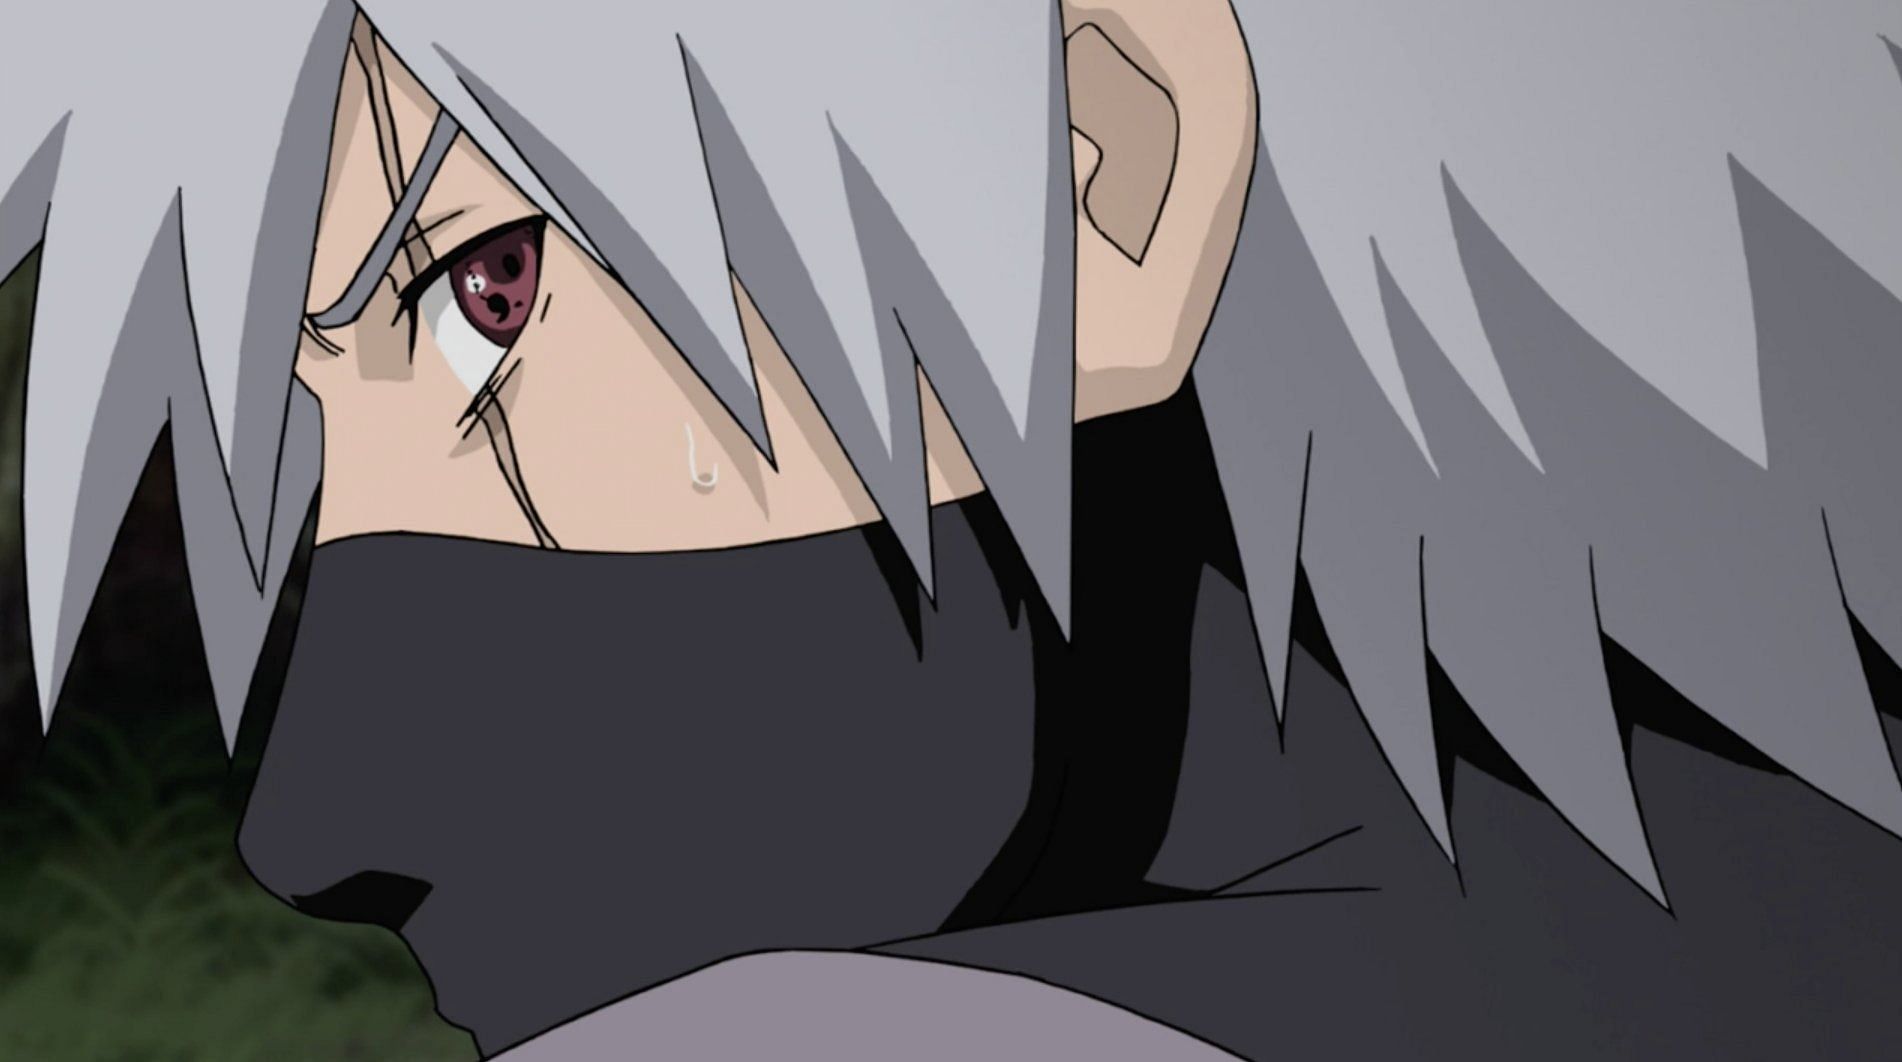 Kakashi Hatake as seen in the Naruto anime (Image via Studio Pierrot)